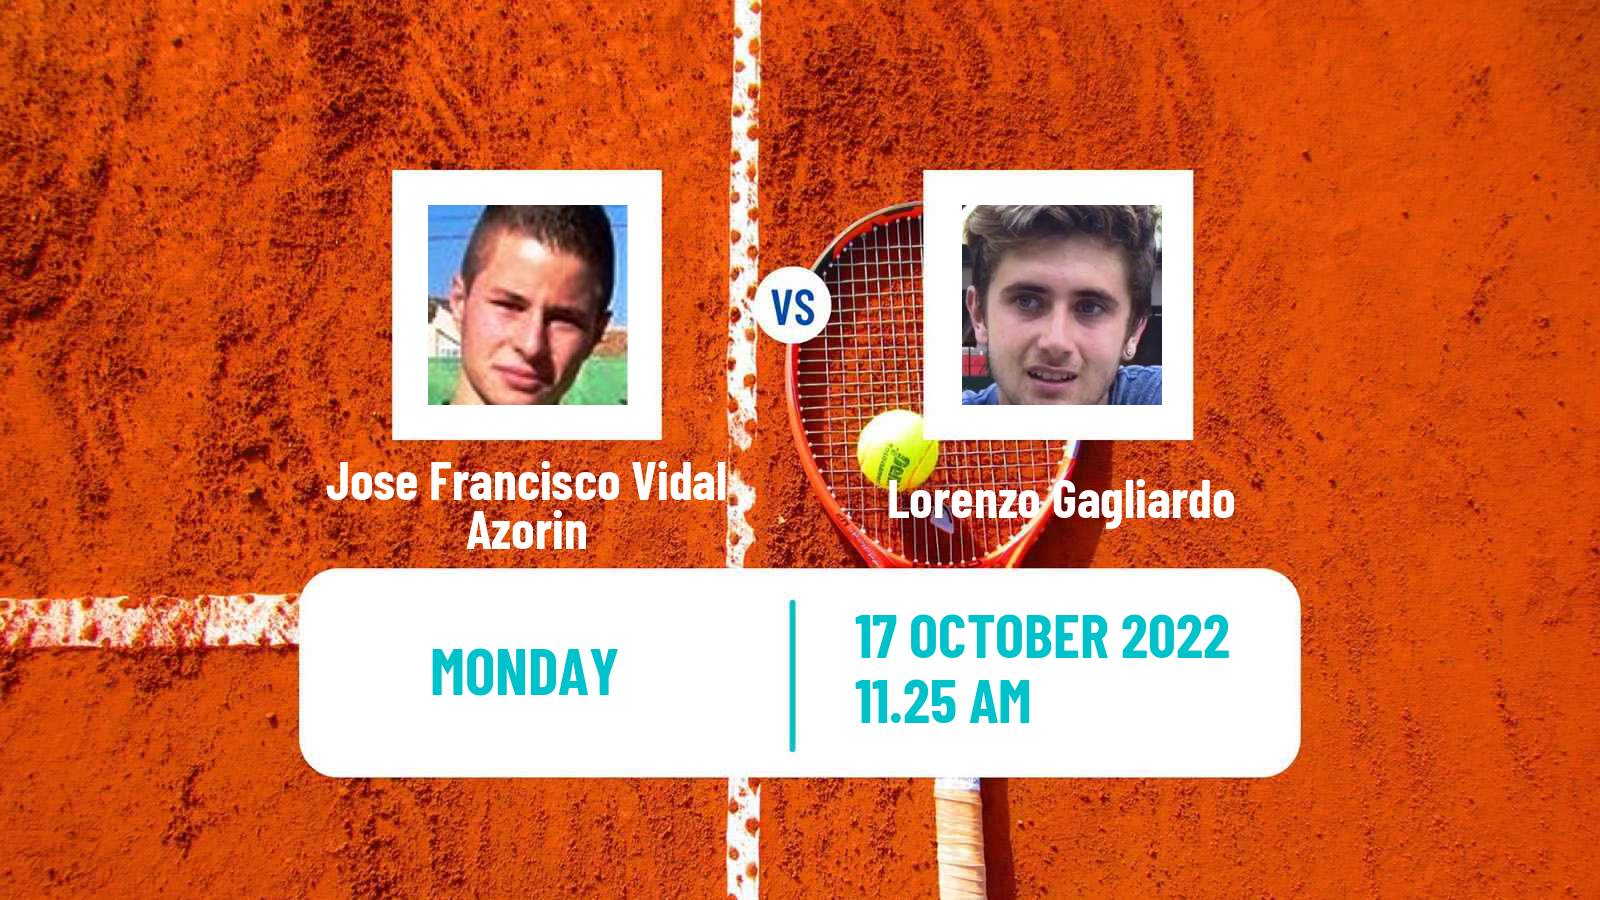 Tennis ATP Challenger Jose Francisco Vidal Azorin - Lorenzo Gagliardo